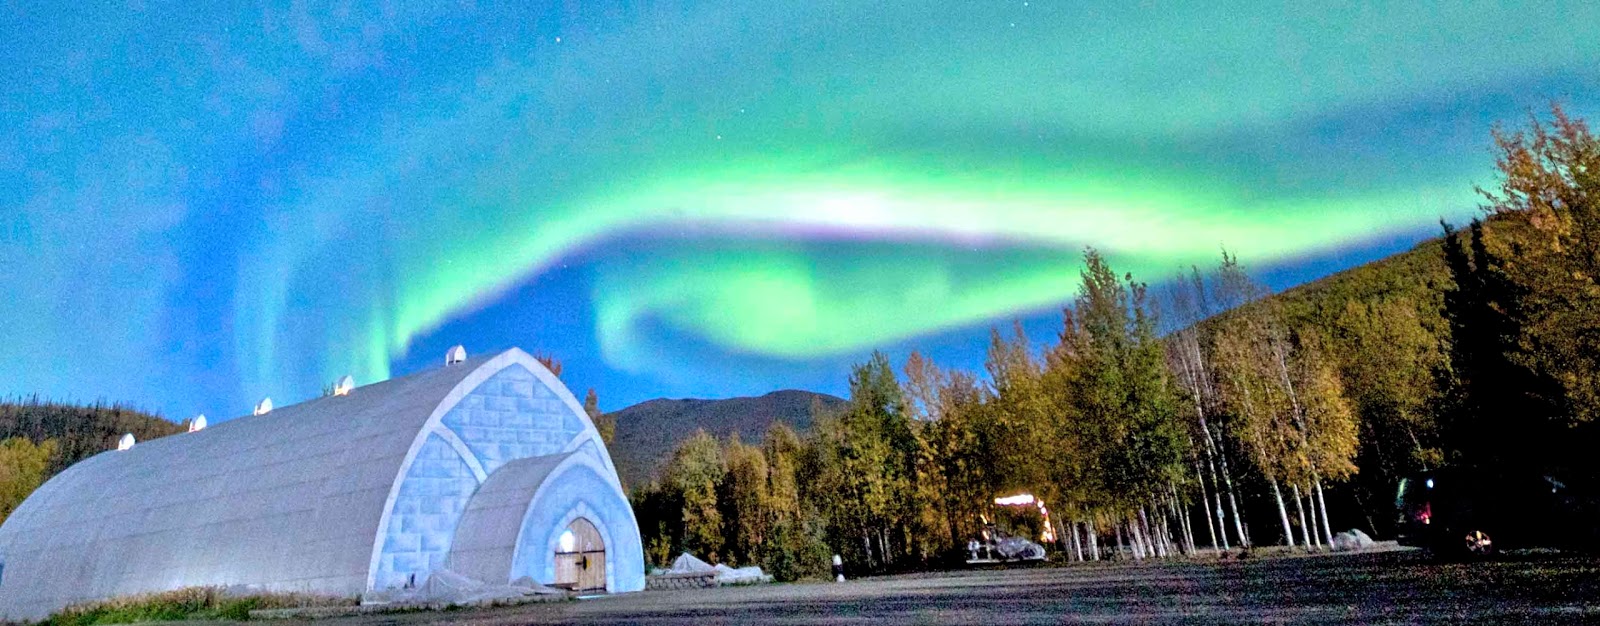 Chena Hot Springs / Aurora Ice Museum, Alaska- Top 10 Coolest Snow Buildings